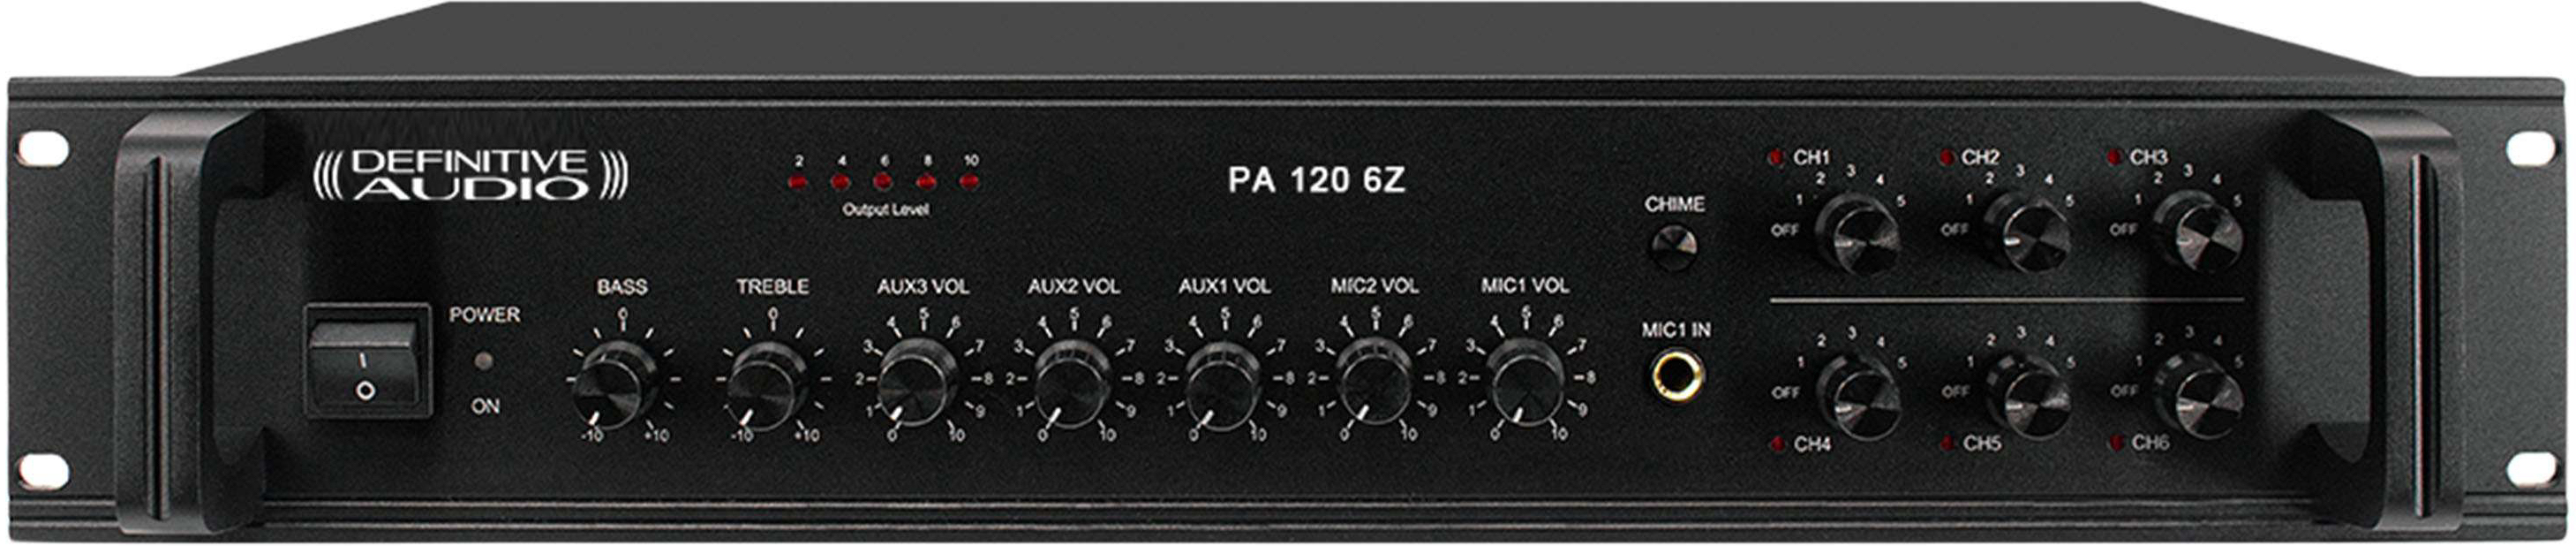 Definitive Audio Pa 120 6z - Multiple channels power amplifier - Main picture